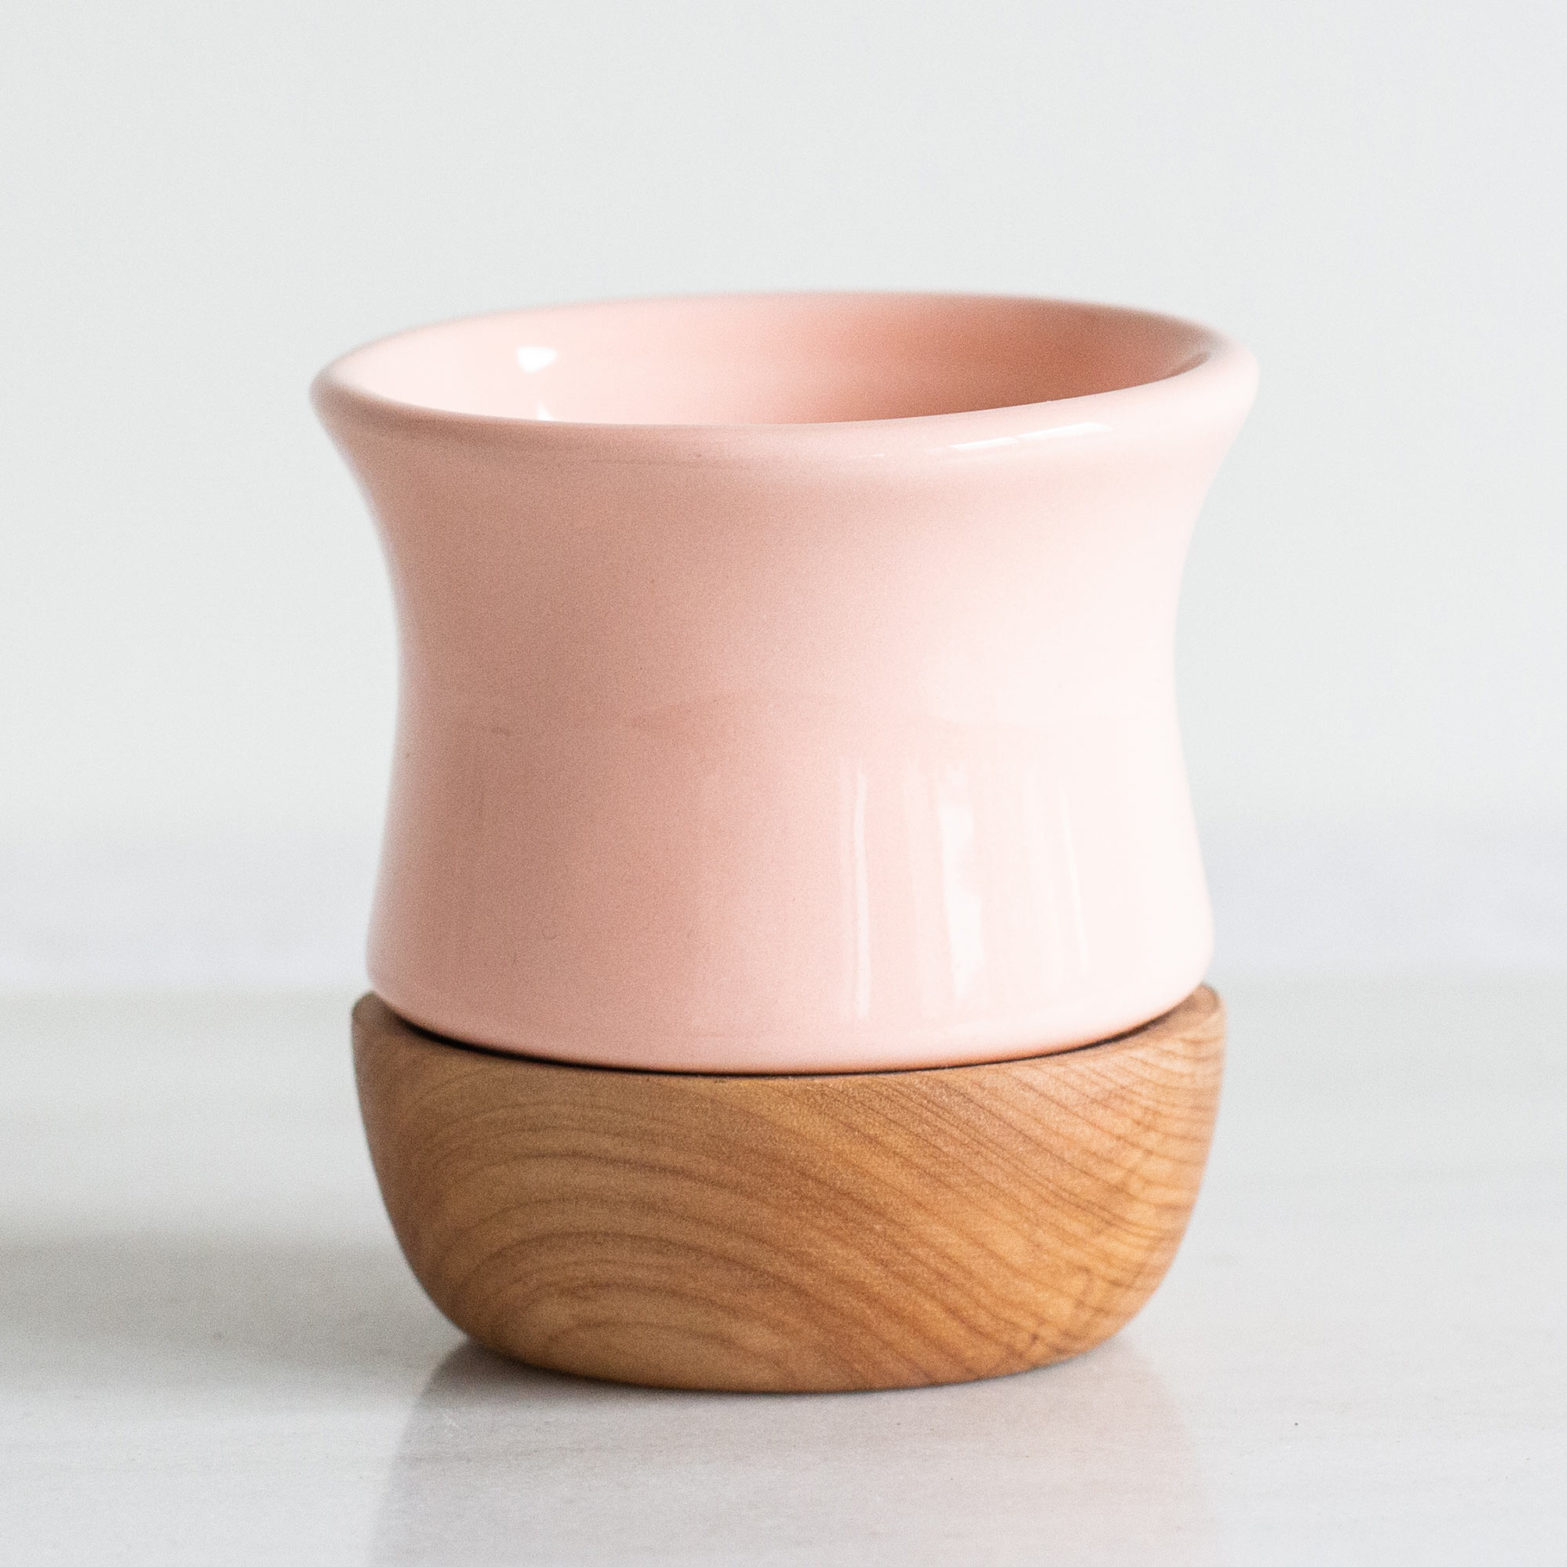 Maria Capital Cup Copita – Wooden Ceramic Yerba Mate Cup